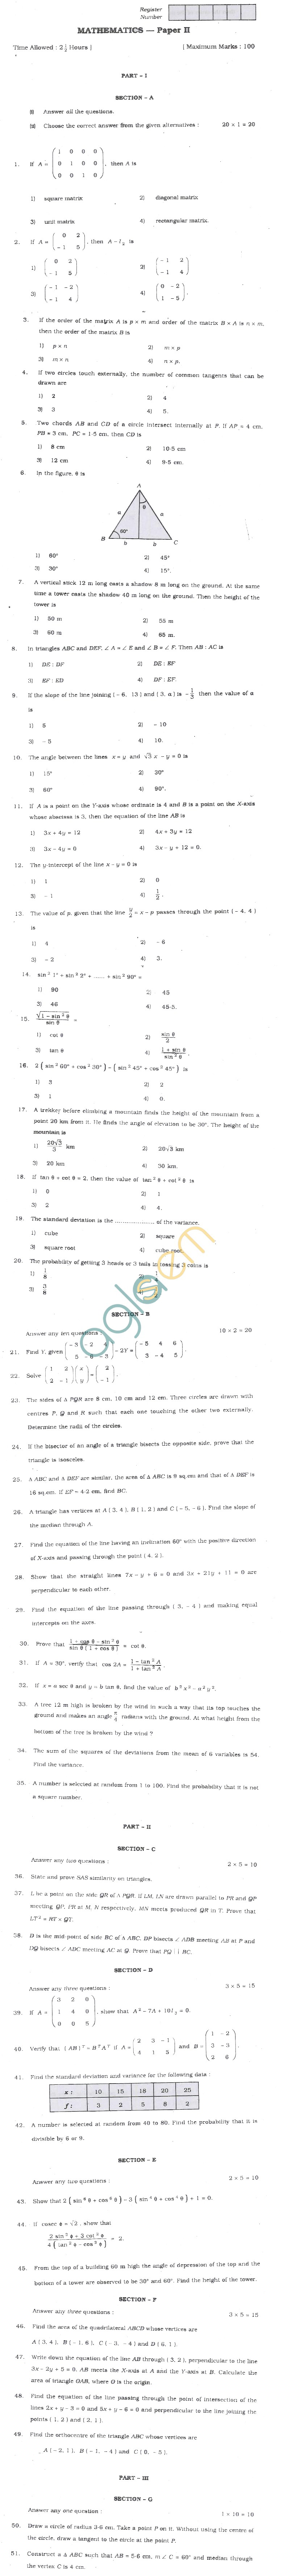 TN Board Matriculation Mathematics Question Papers September 2011